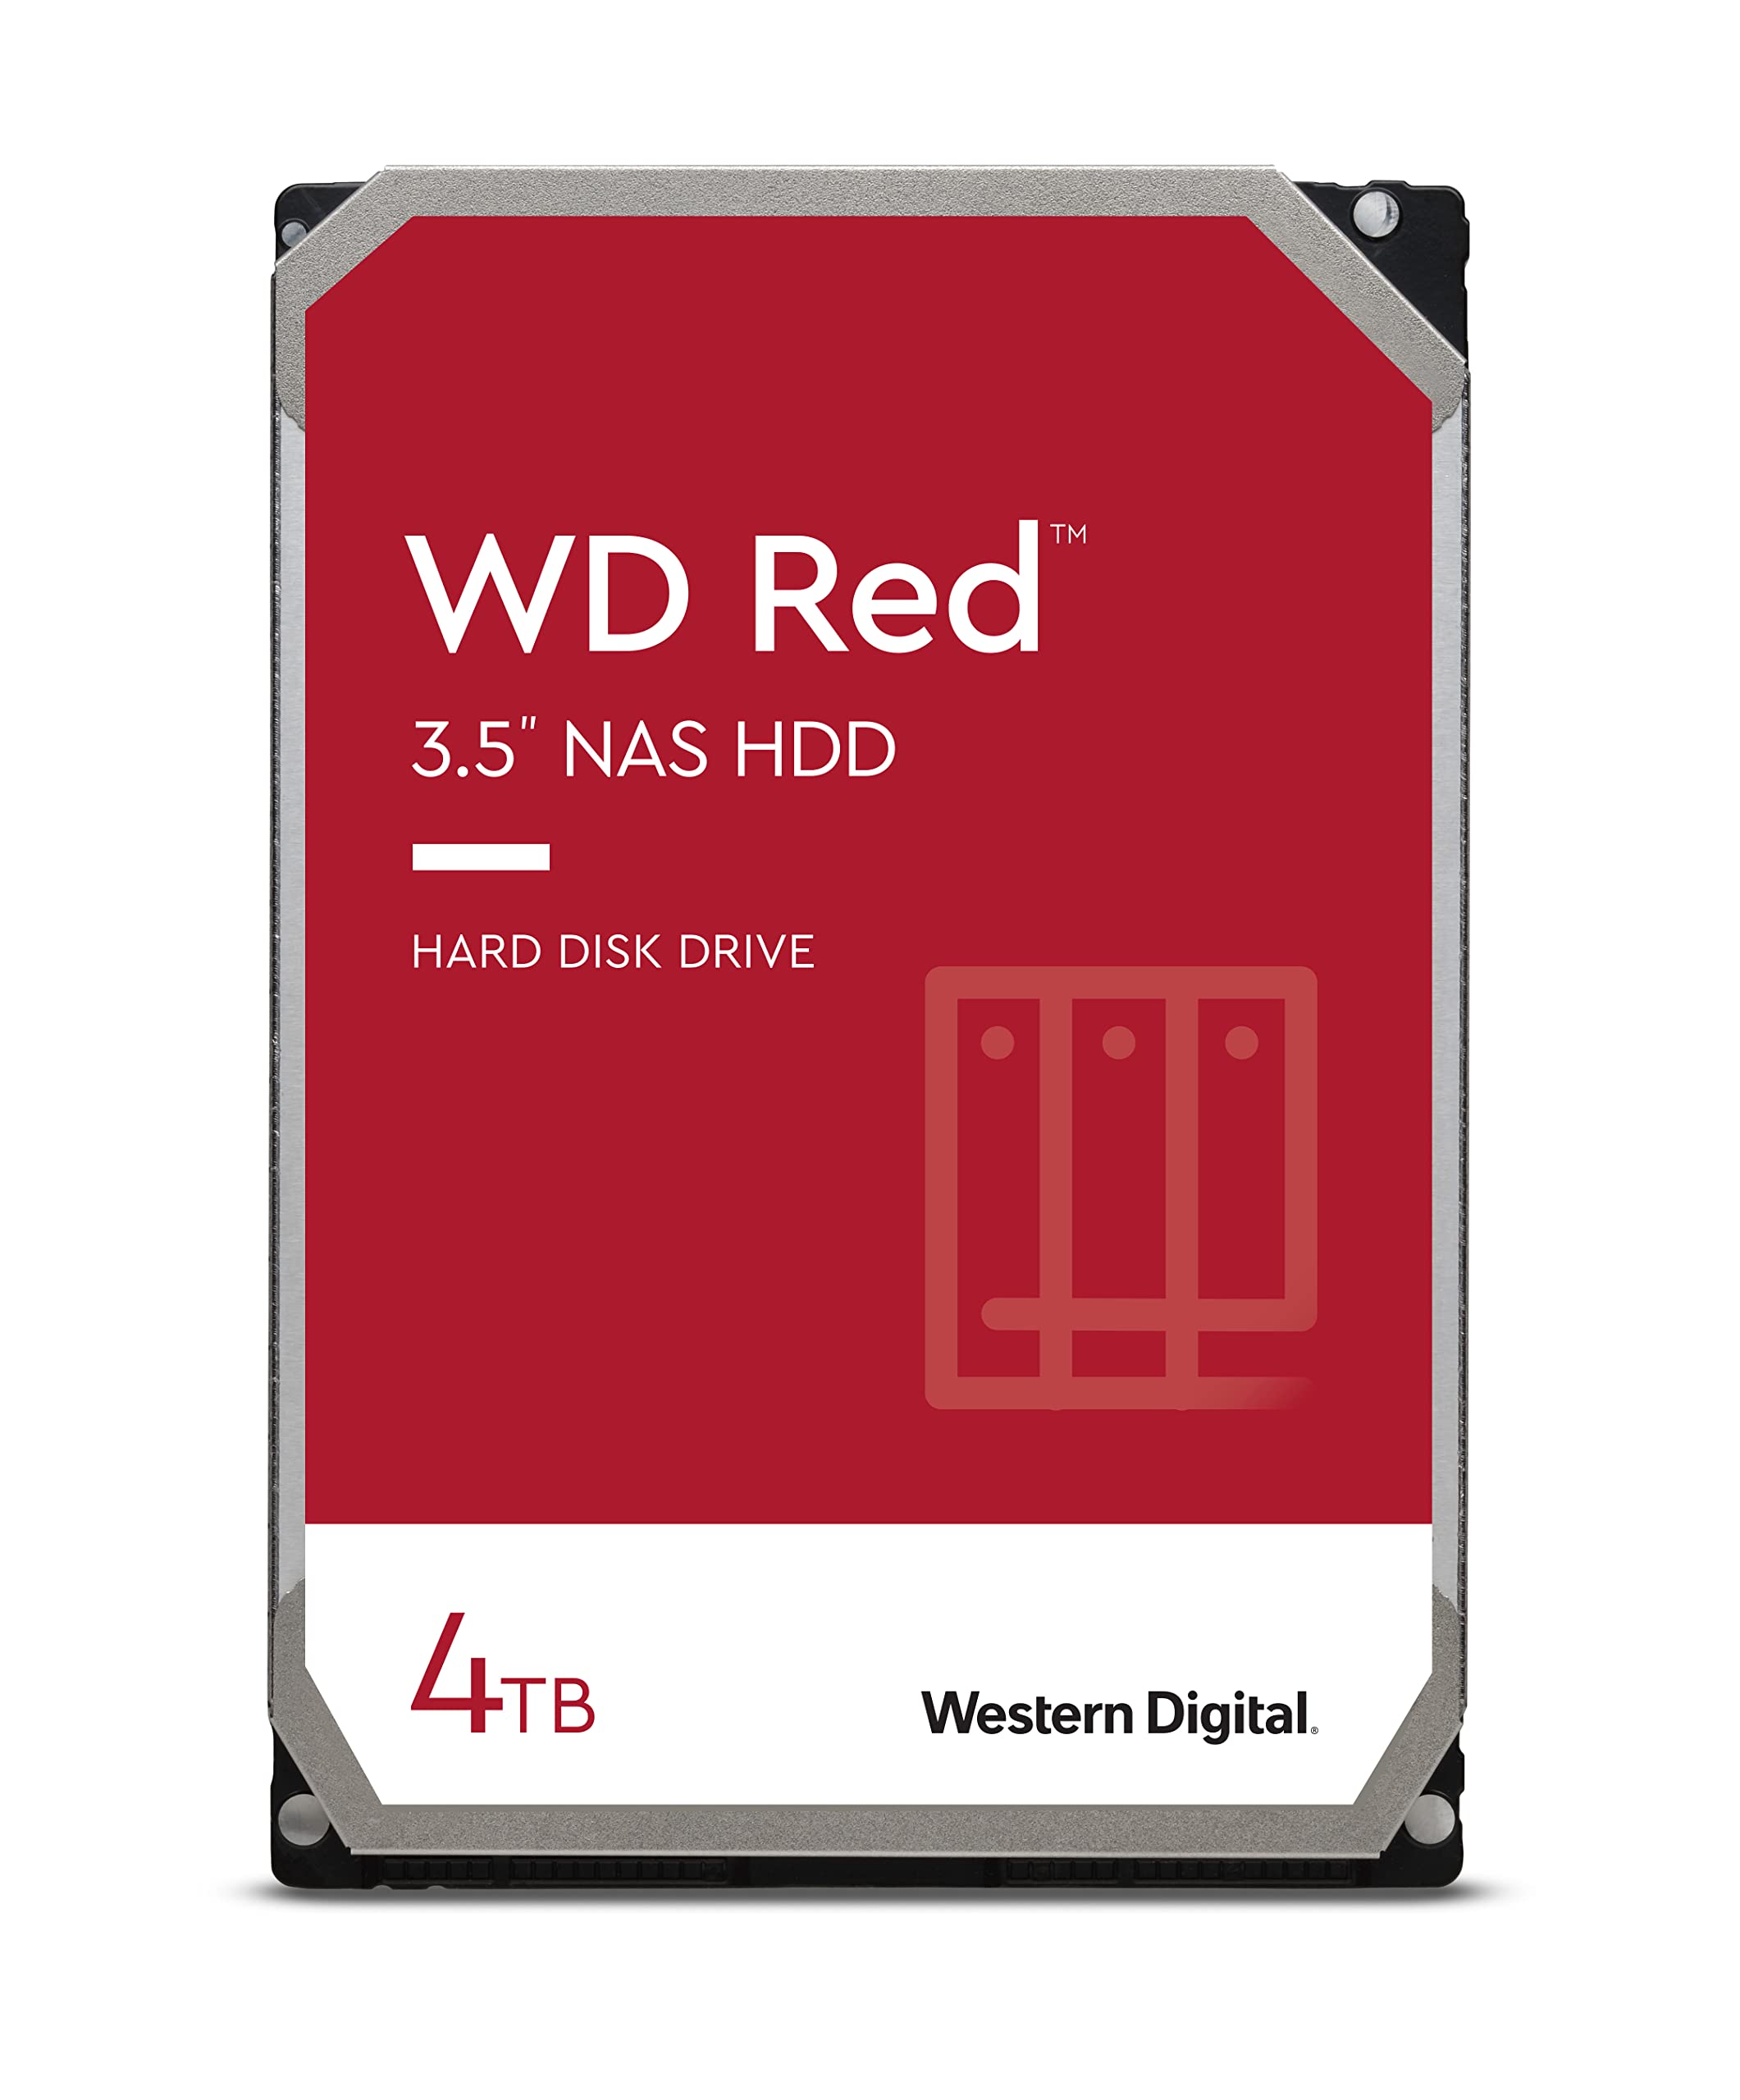 wd red 4tb hard drive